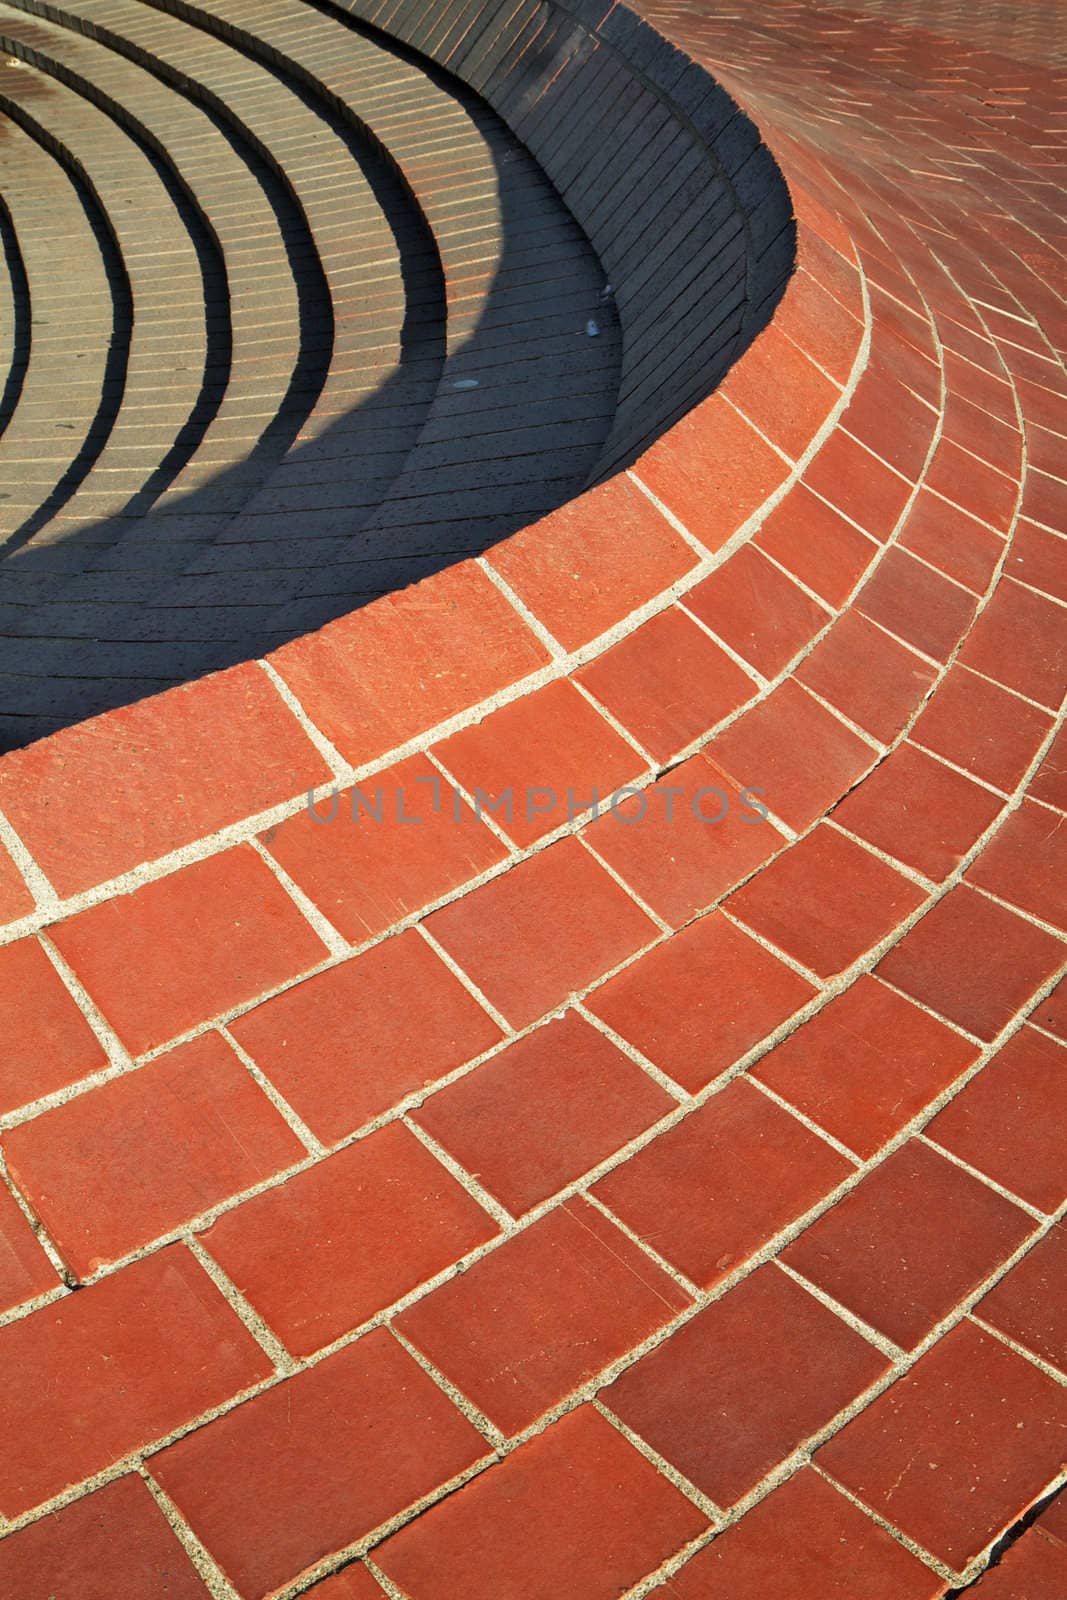 Curved brick wall by bobkeenan